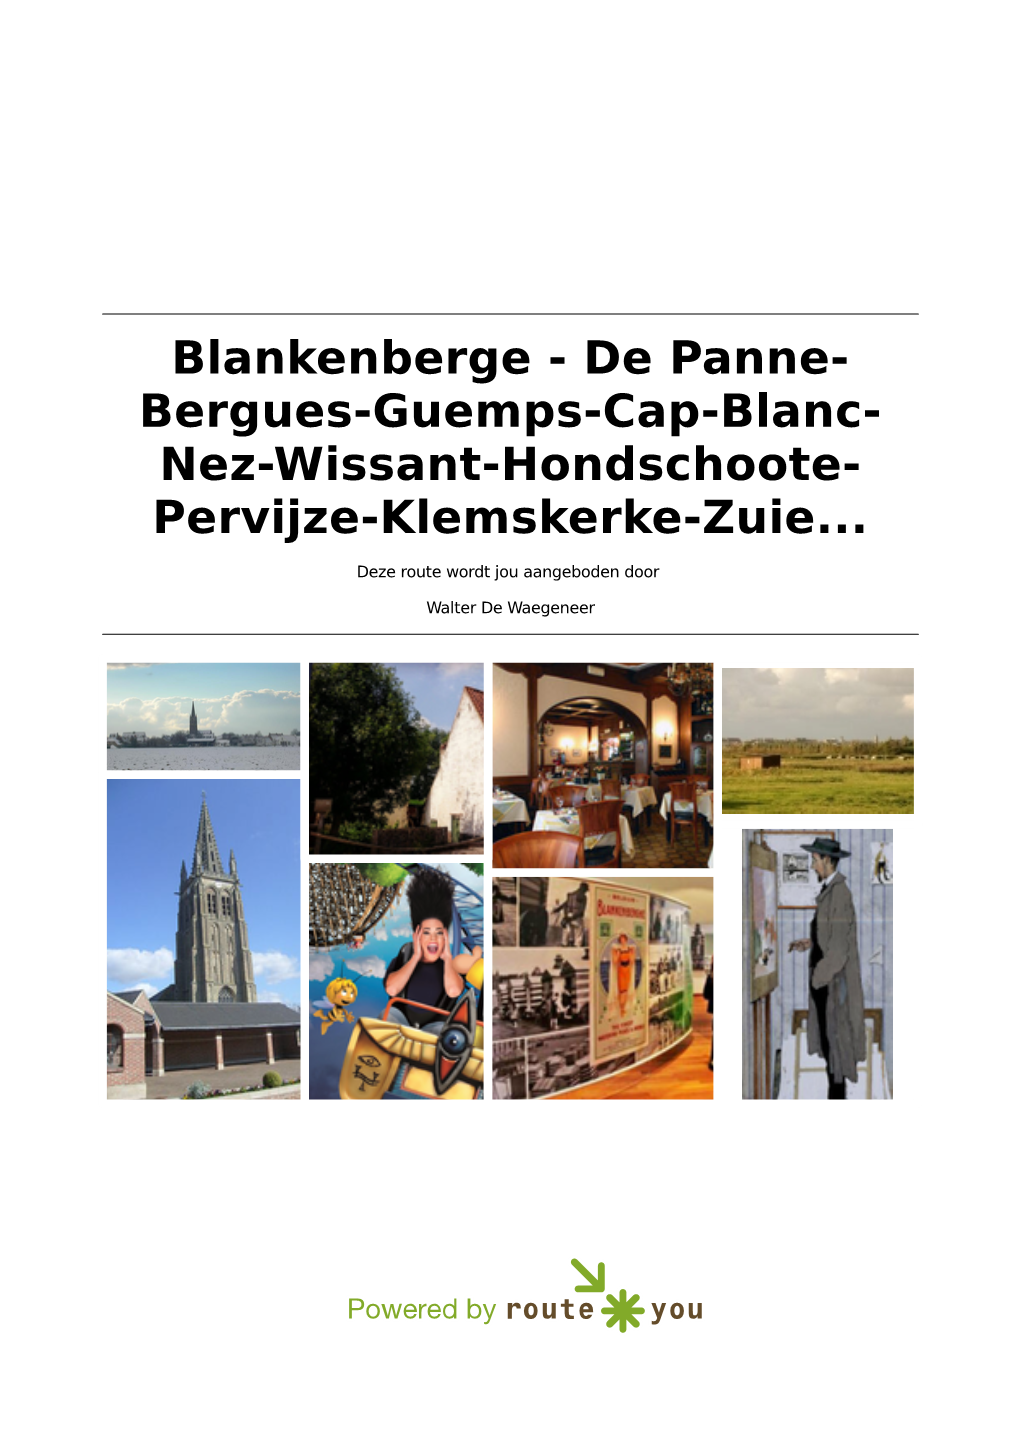 Bergues-Guemps-Cap-Blanc- Nez-Wissant-Hondschoote- Pervijze-Klemskerke-Zuie